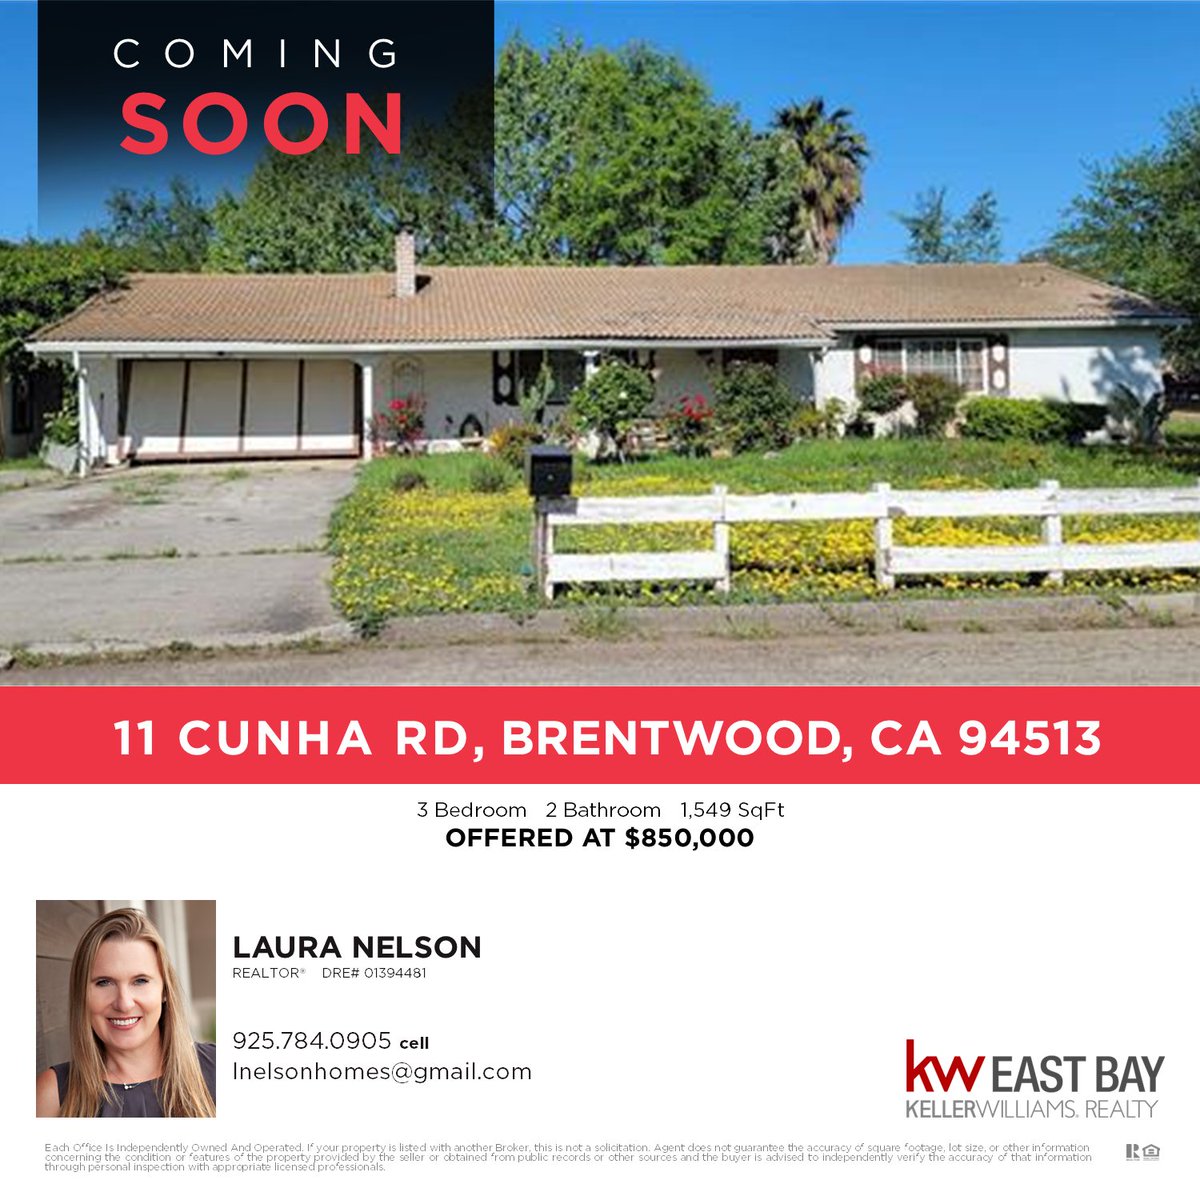 11 Cunha Rd, Brentwood, CA 94513 - Coming Soon from Laura Nelson!

#kellerwilliams #bayarearealestate #bayarearealtor